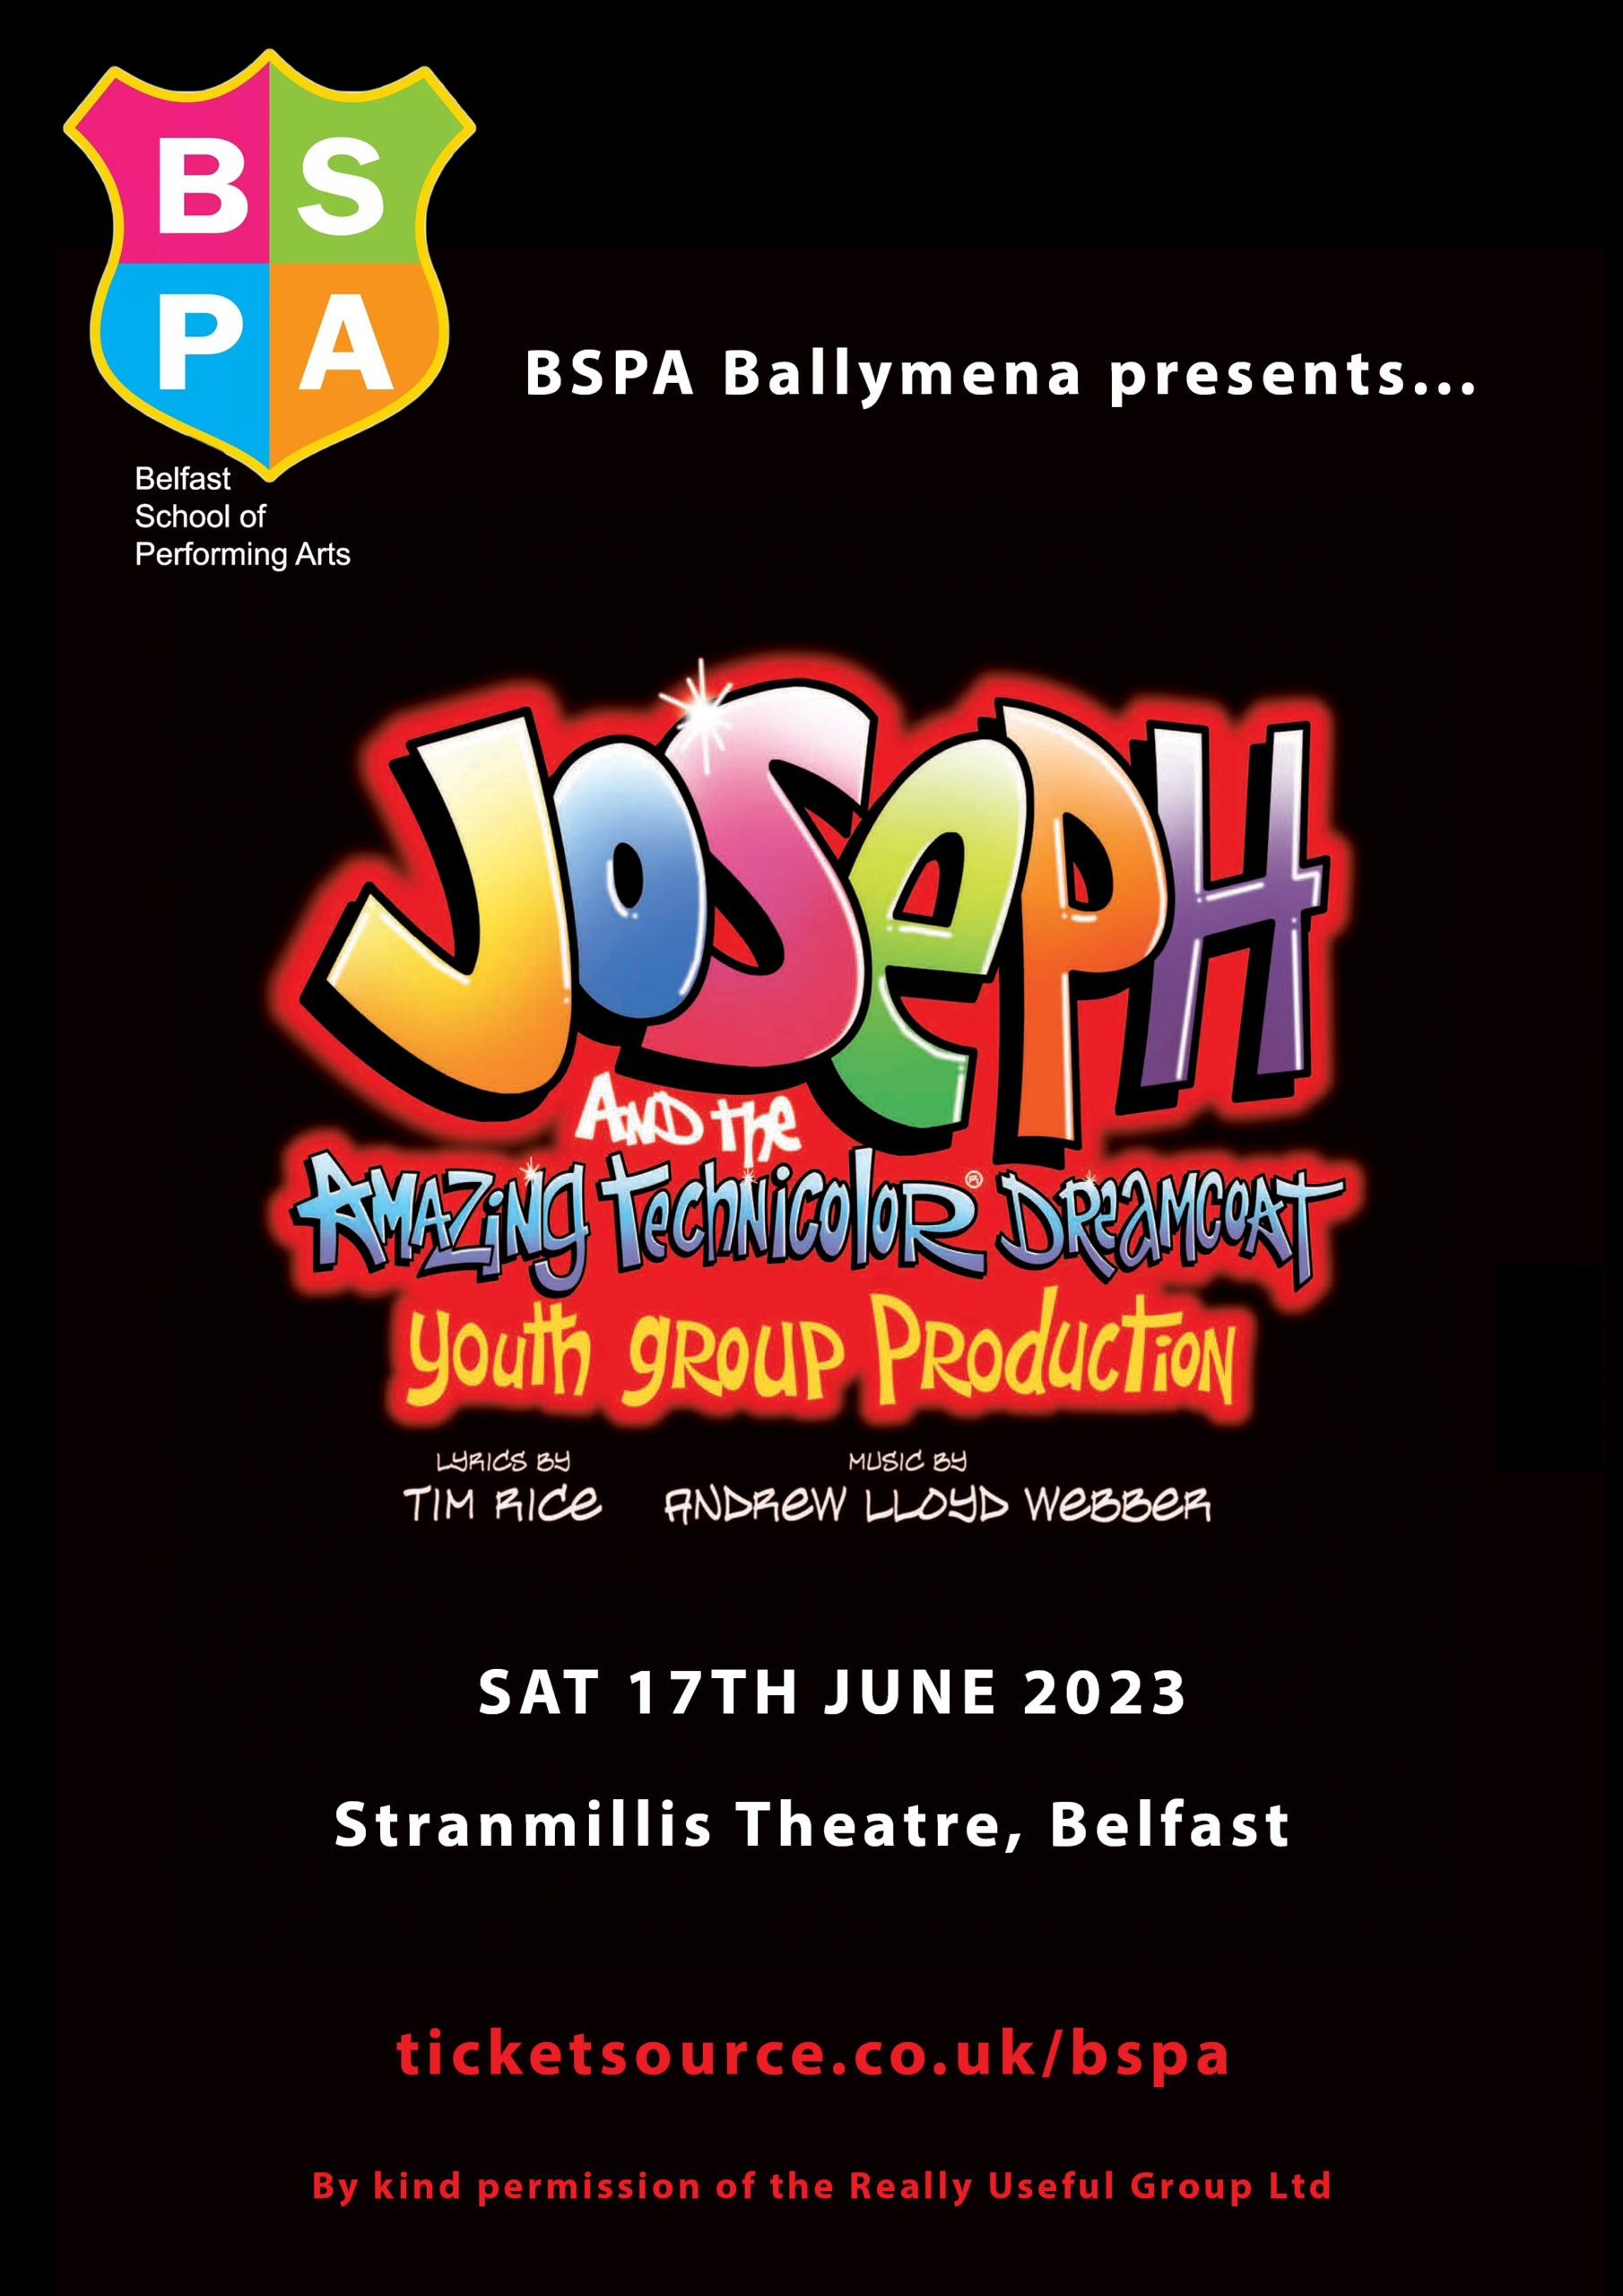 BSPA Ballymena presents: “Joseph and the Amazing technicolor Dreamcoat” image